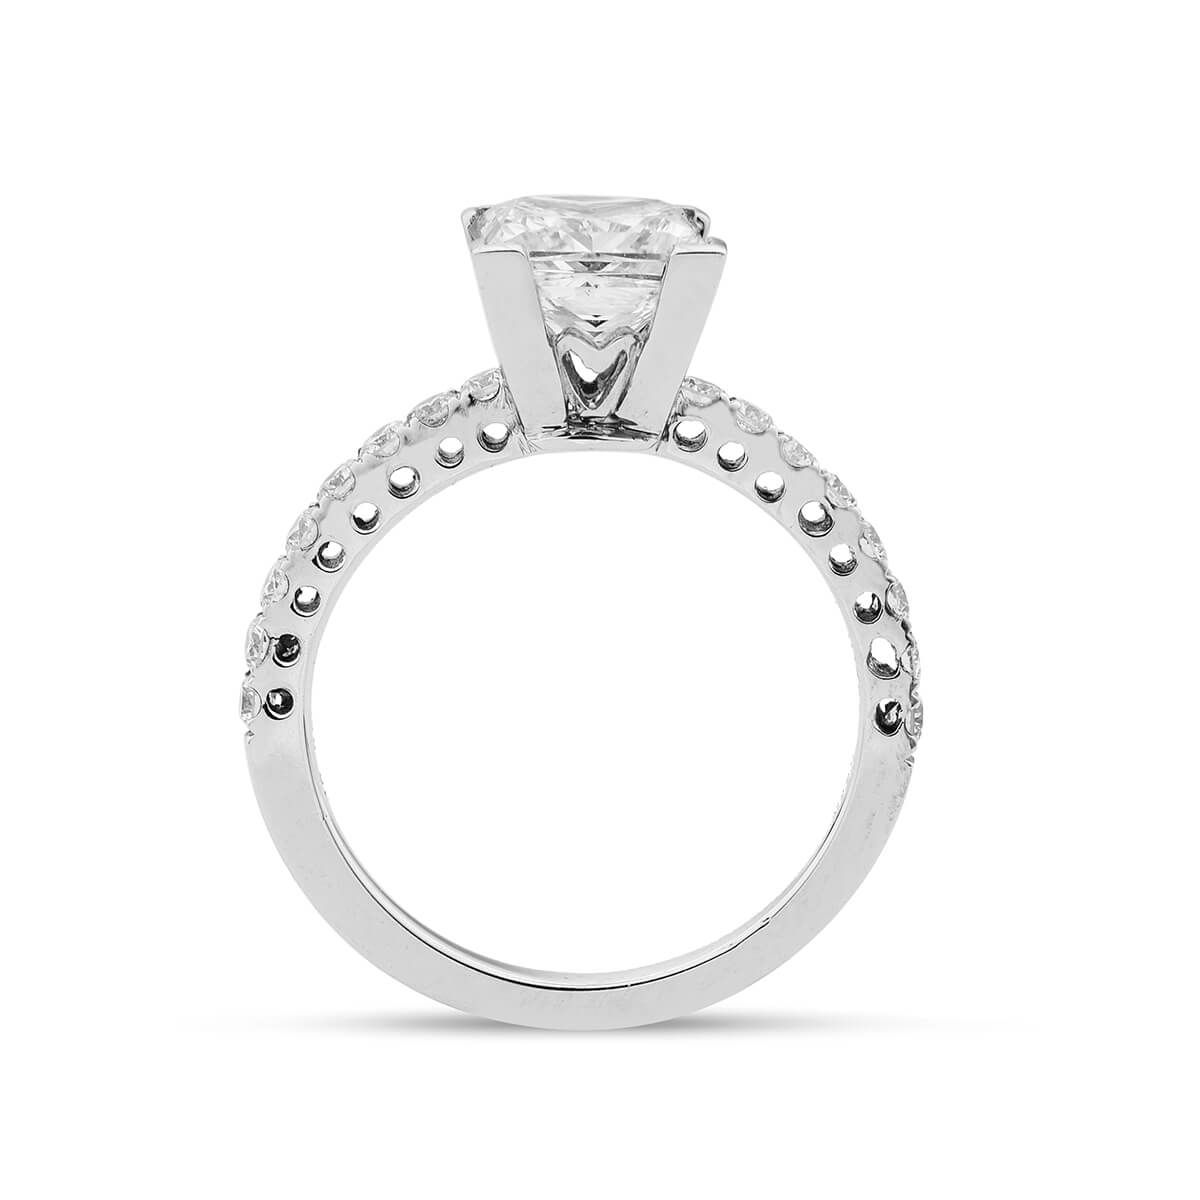  White Diamond Ring, 0.29 Ct. TW, Princess shape, GIA Certified, 1126960416